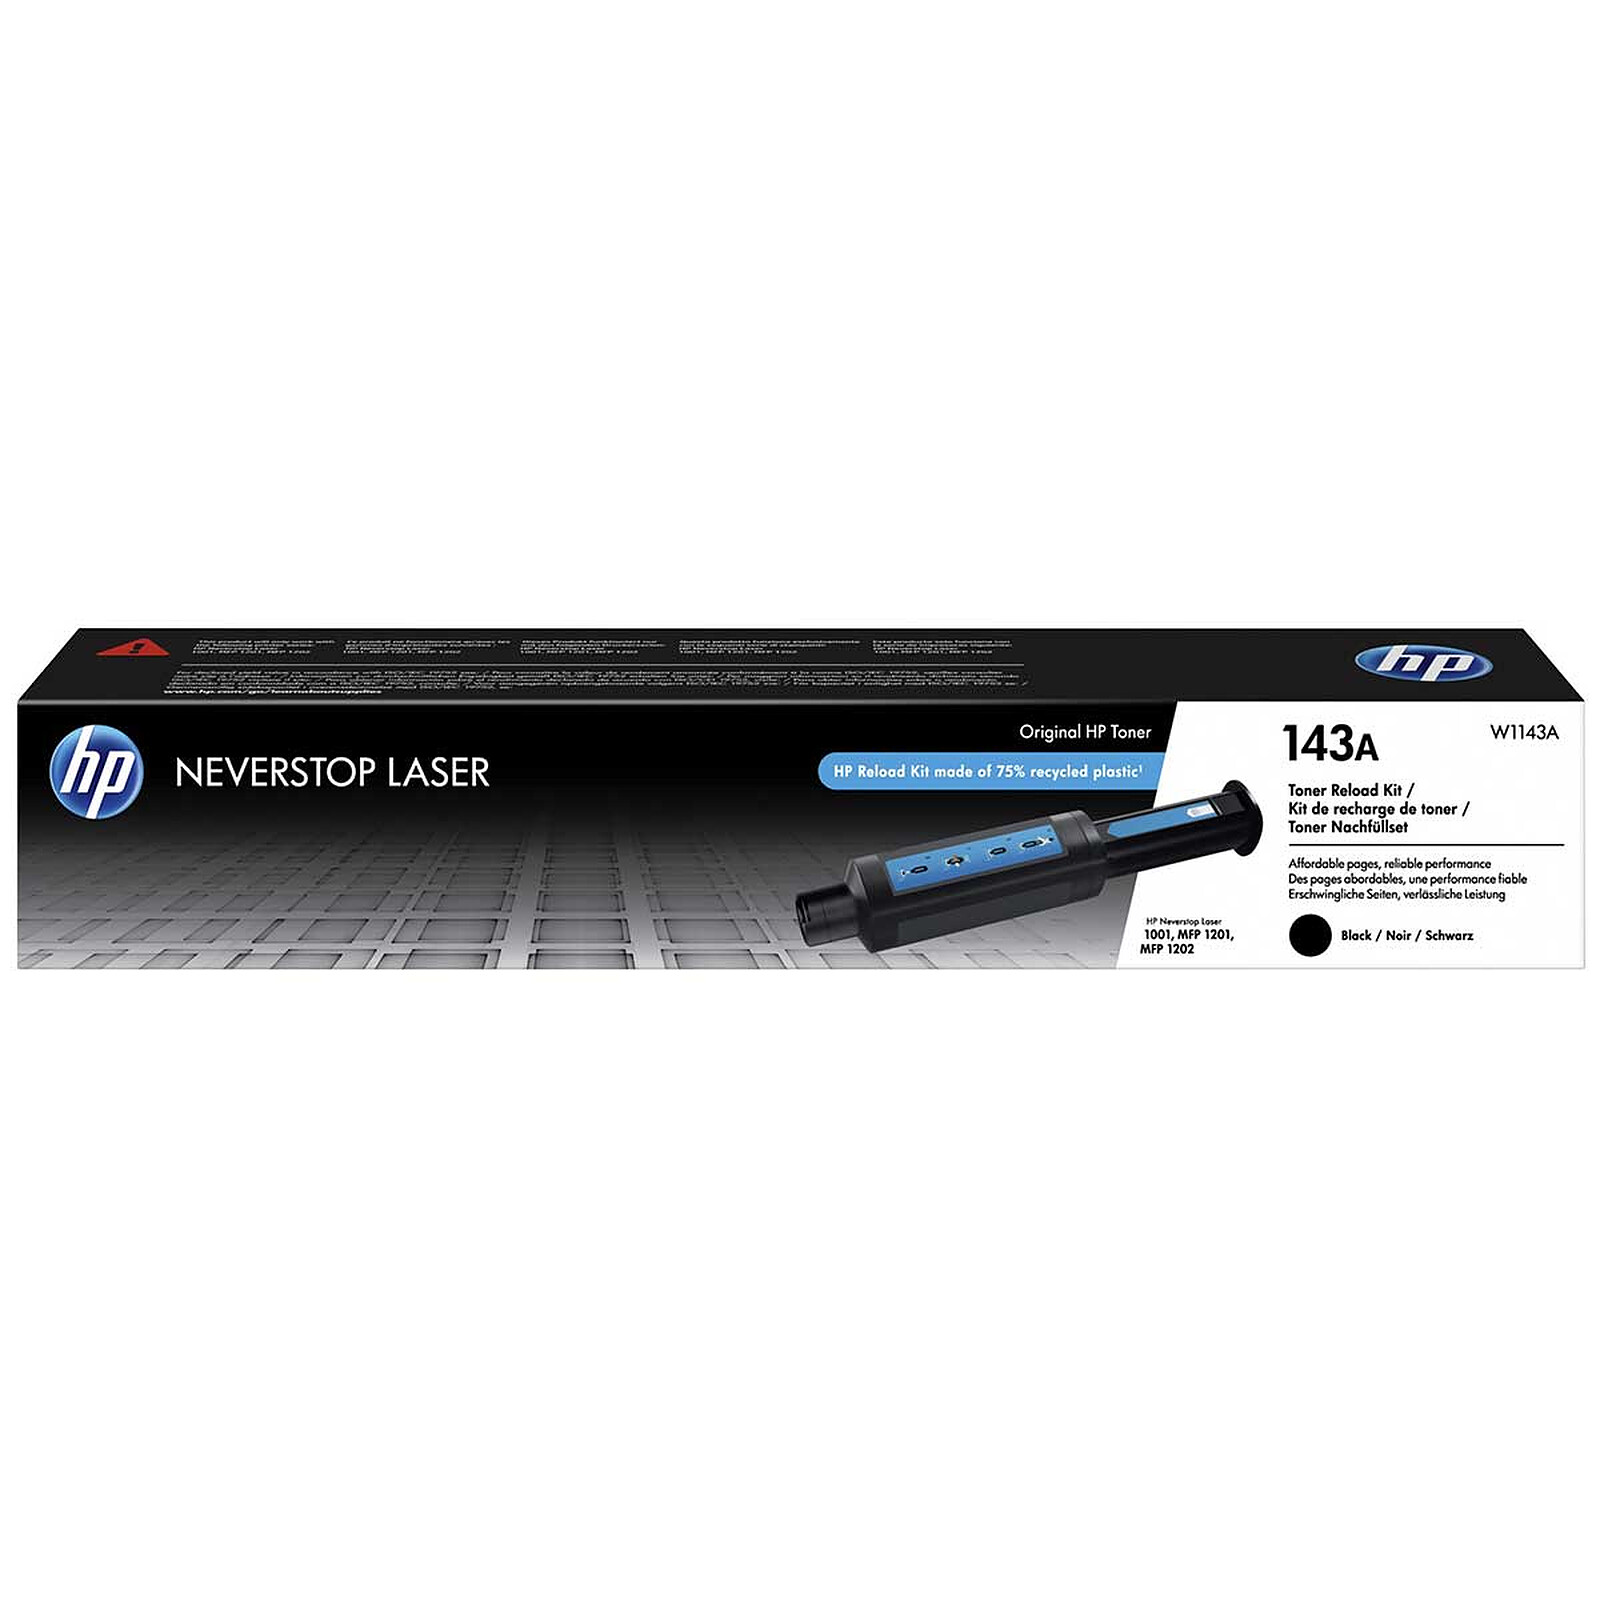 HP 143A (W1143A) - Black LDLC cartridge - Toner 